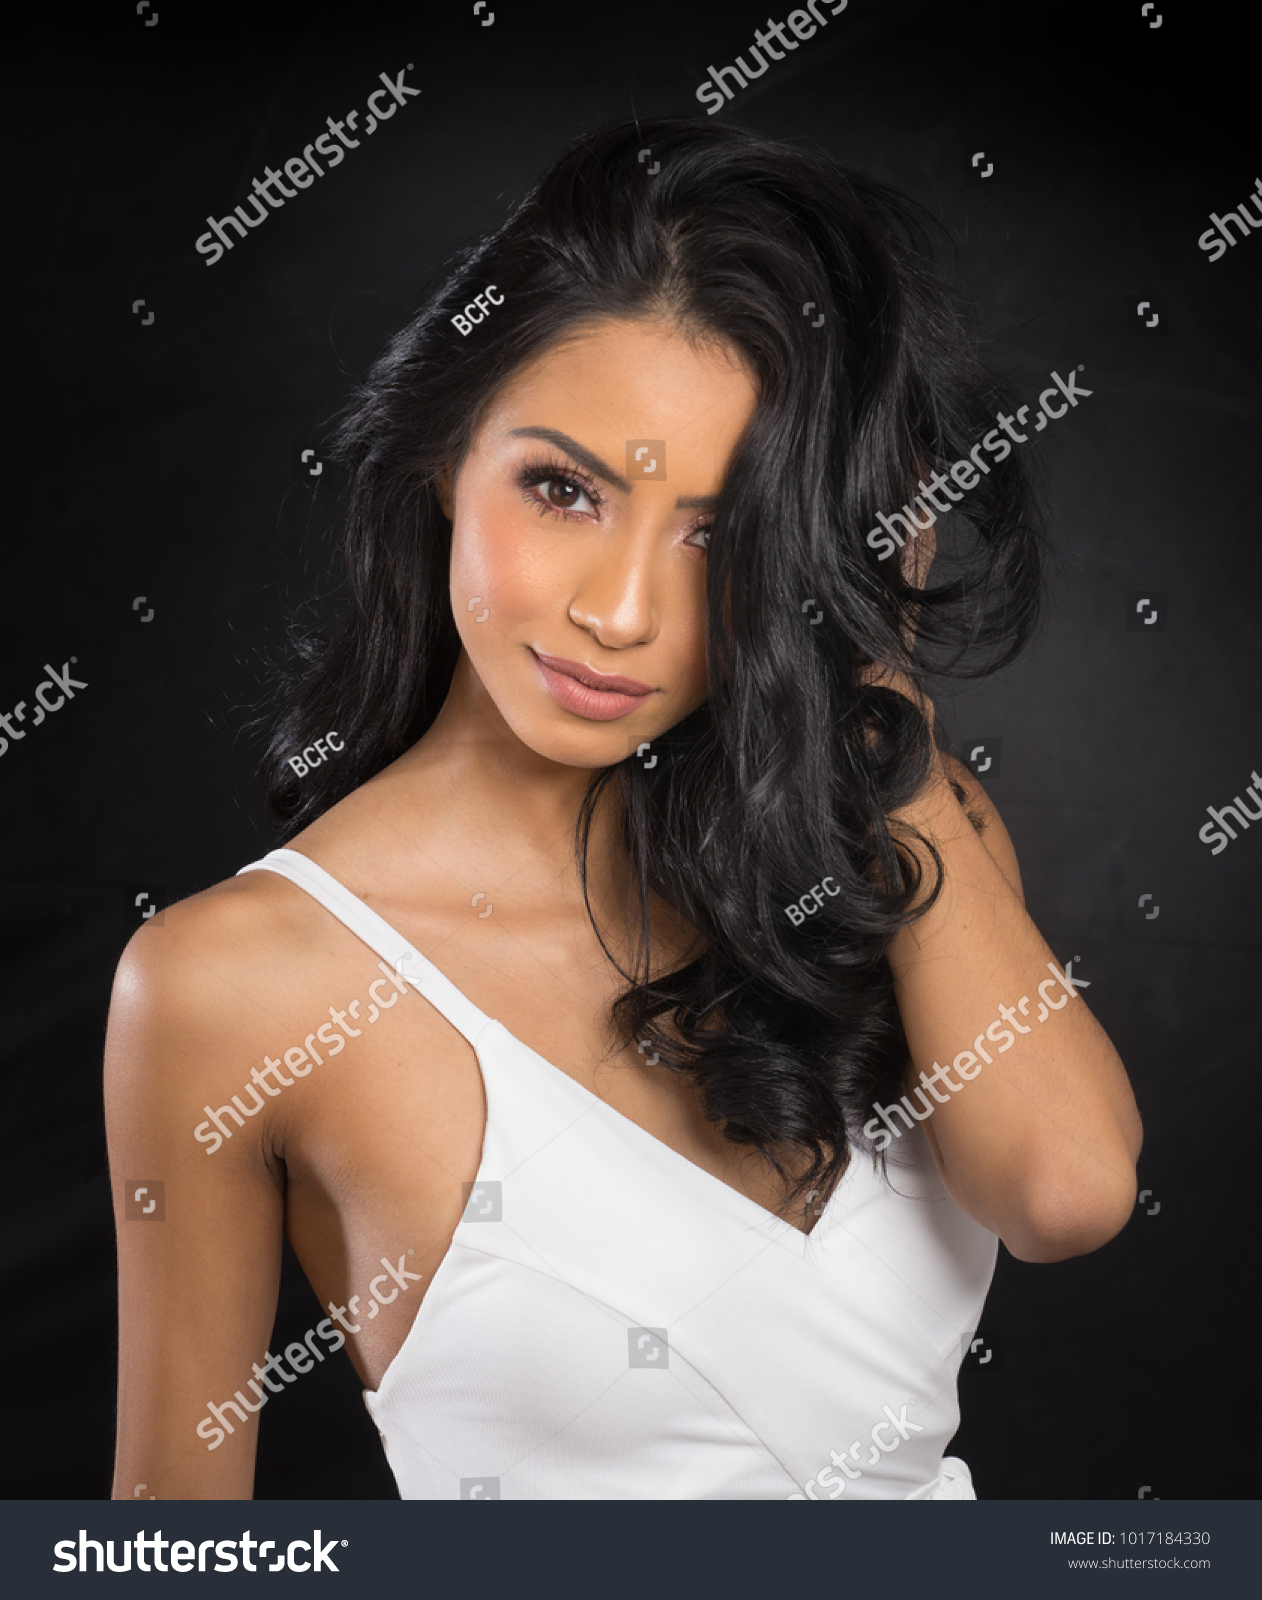 Beautiful woman's face and long dark hair wearing white dress #1017184330